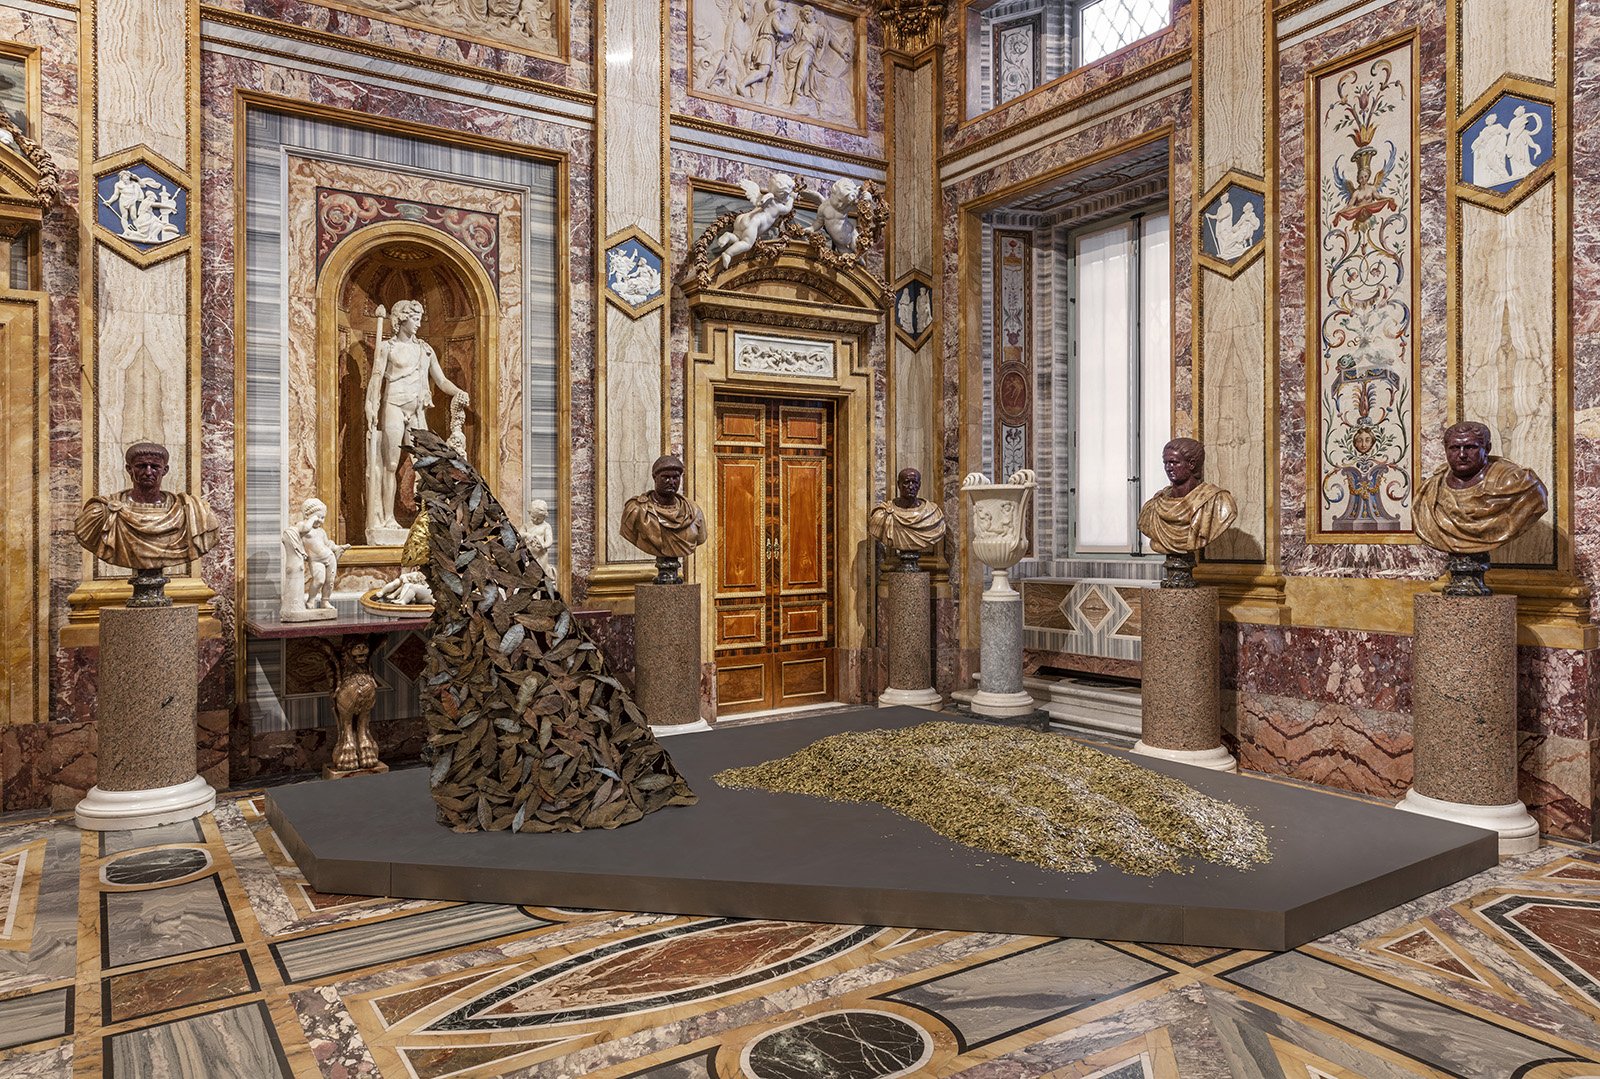  Giuseppe Penone. Gesti universali, Installation view, Sala degli Impertaori, Galleria Borghese, Roma - ph. S. Pellion © Galleria Borghese 